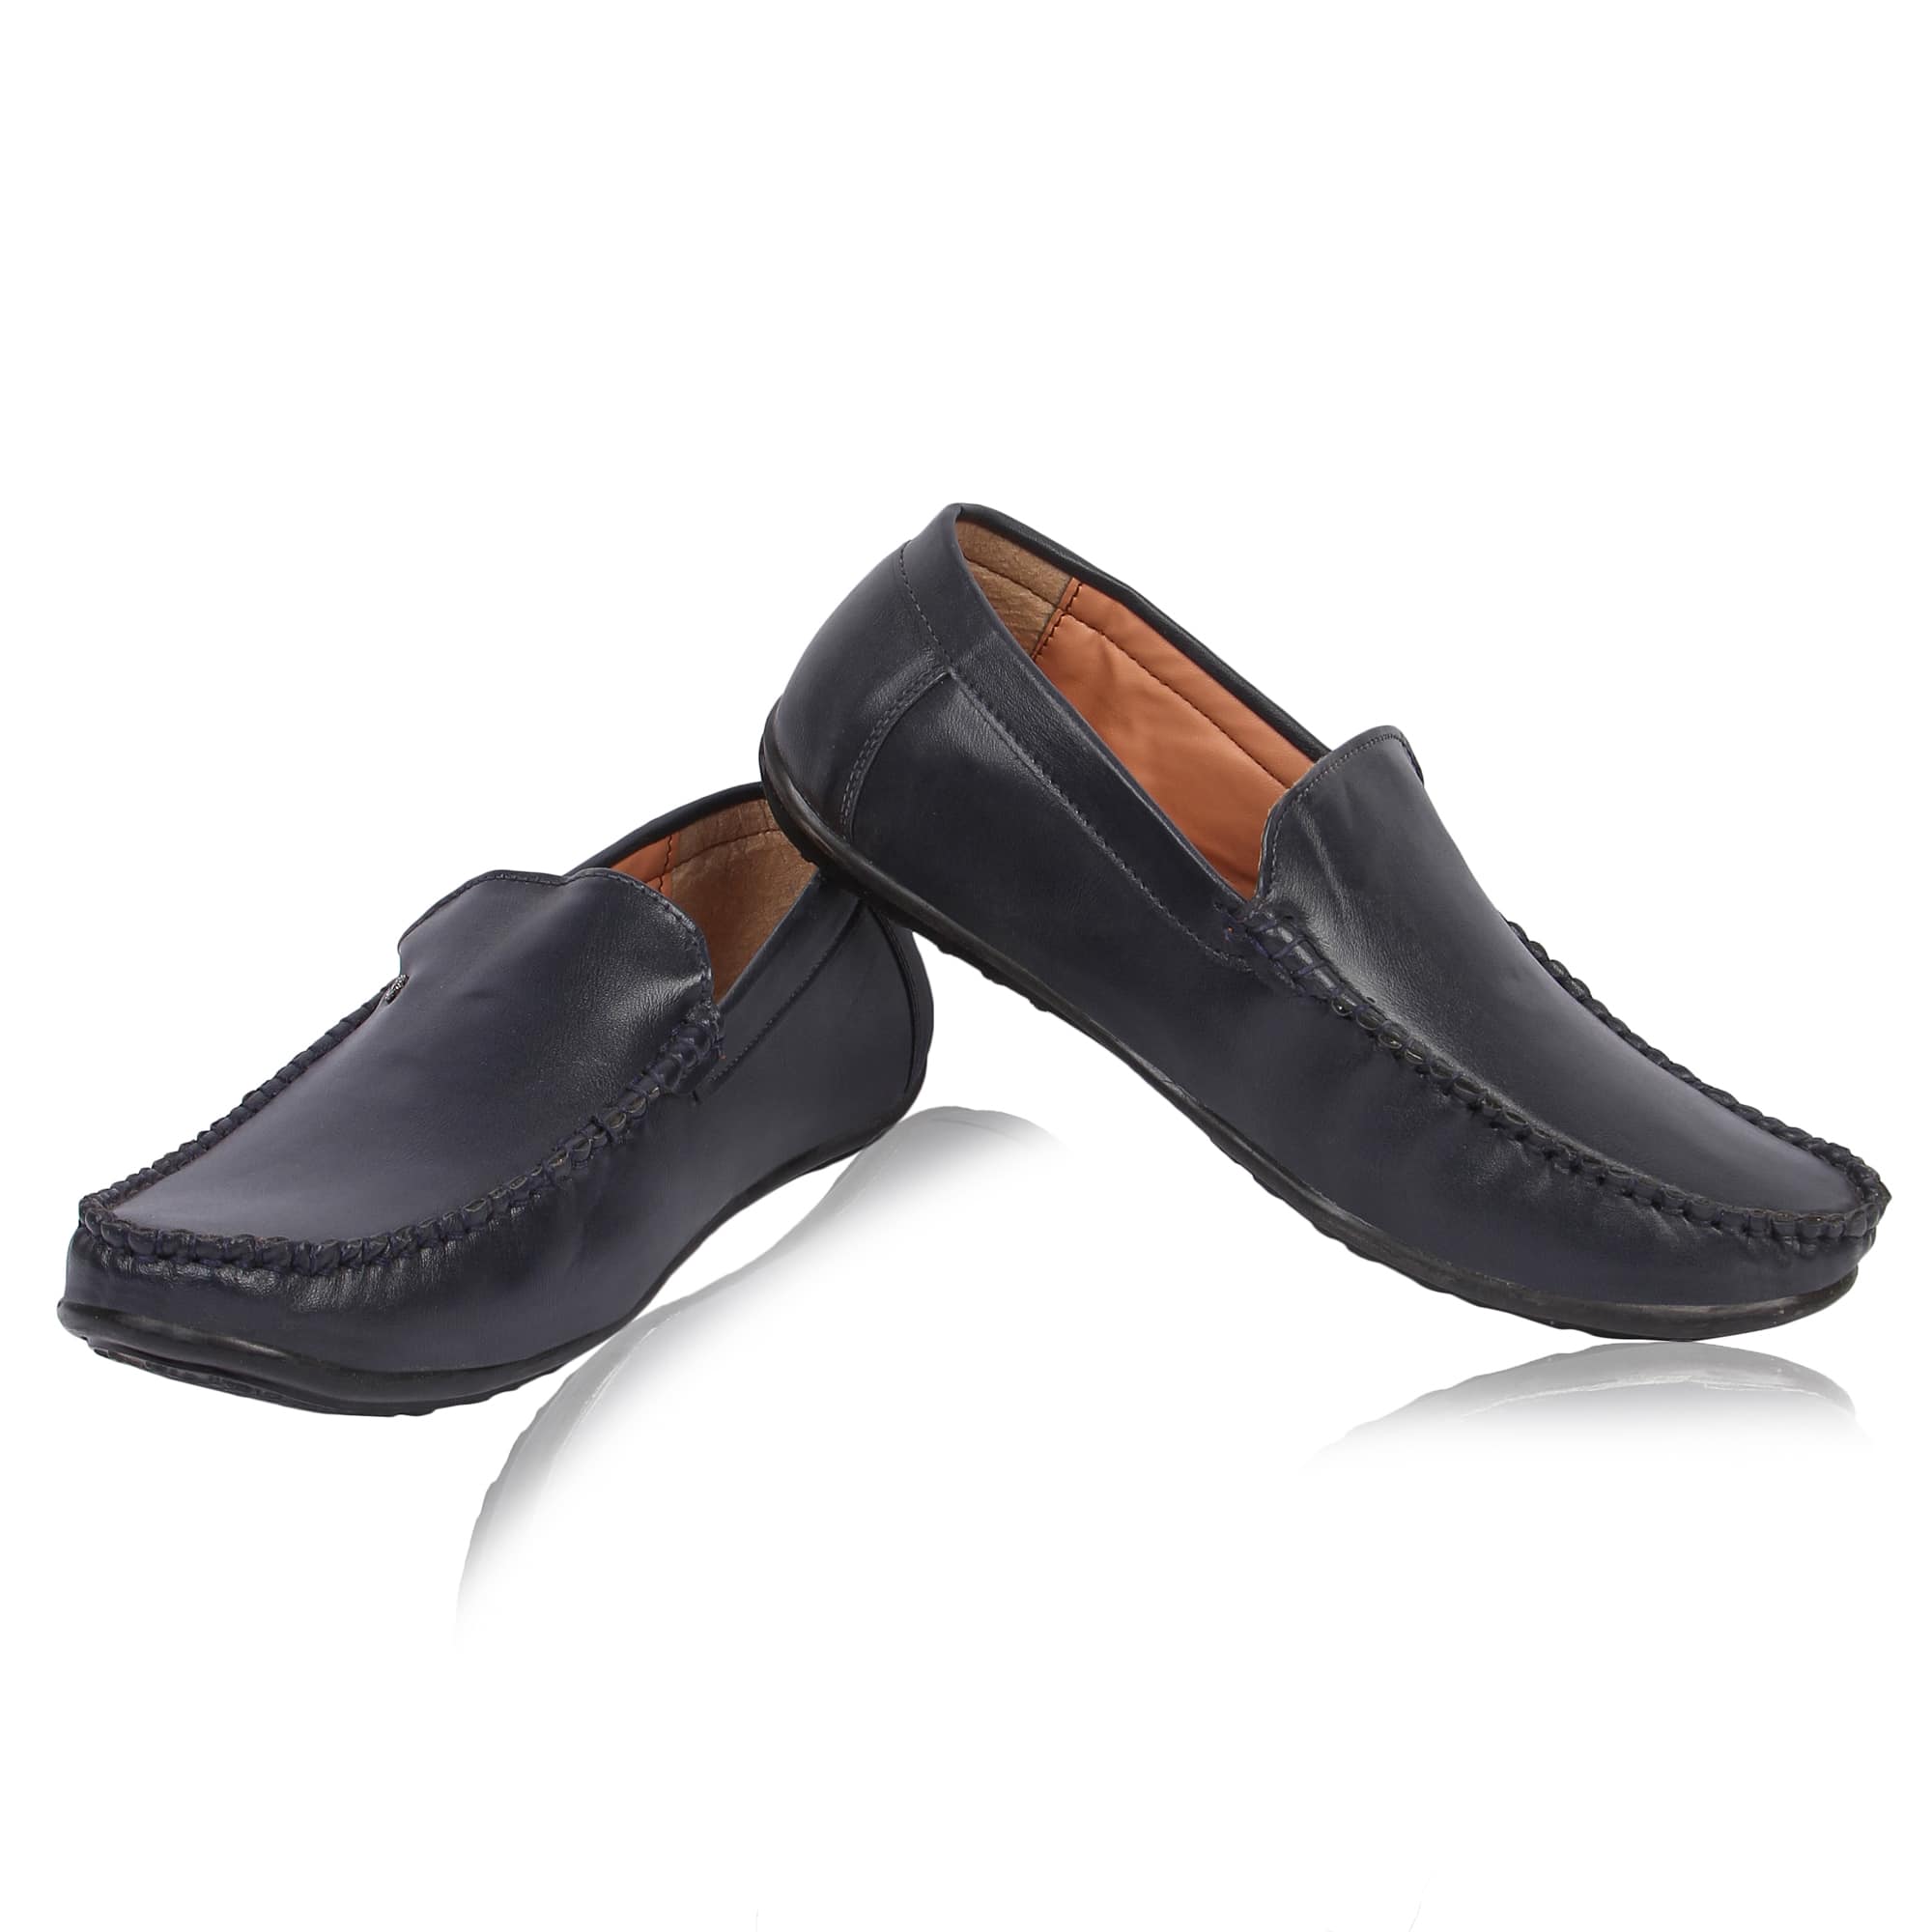 IMG_0149-min | Online Store for Men Footwear in India